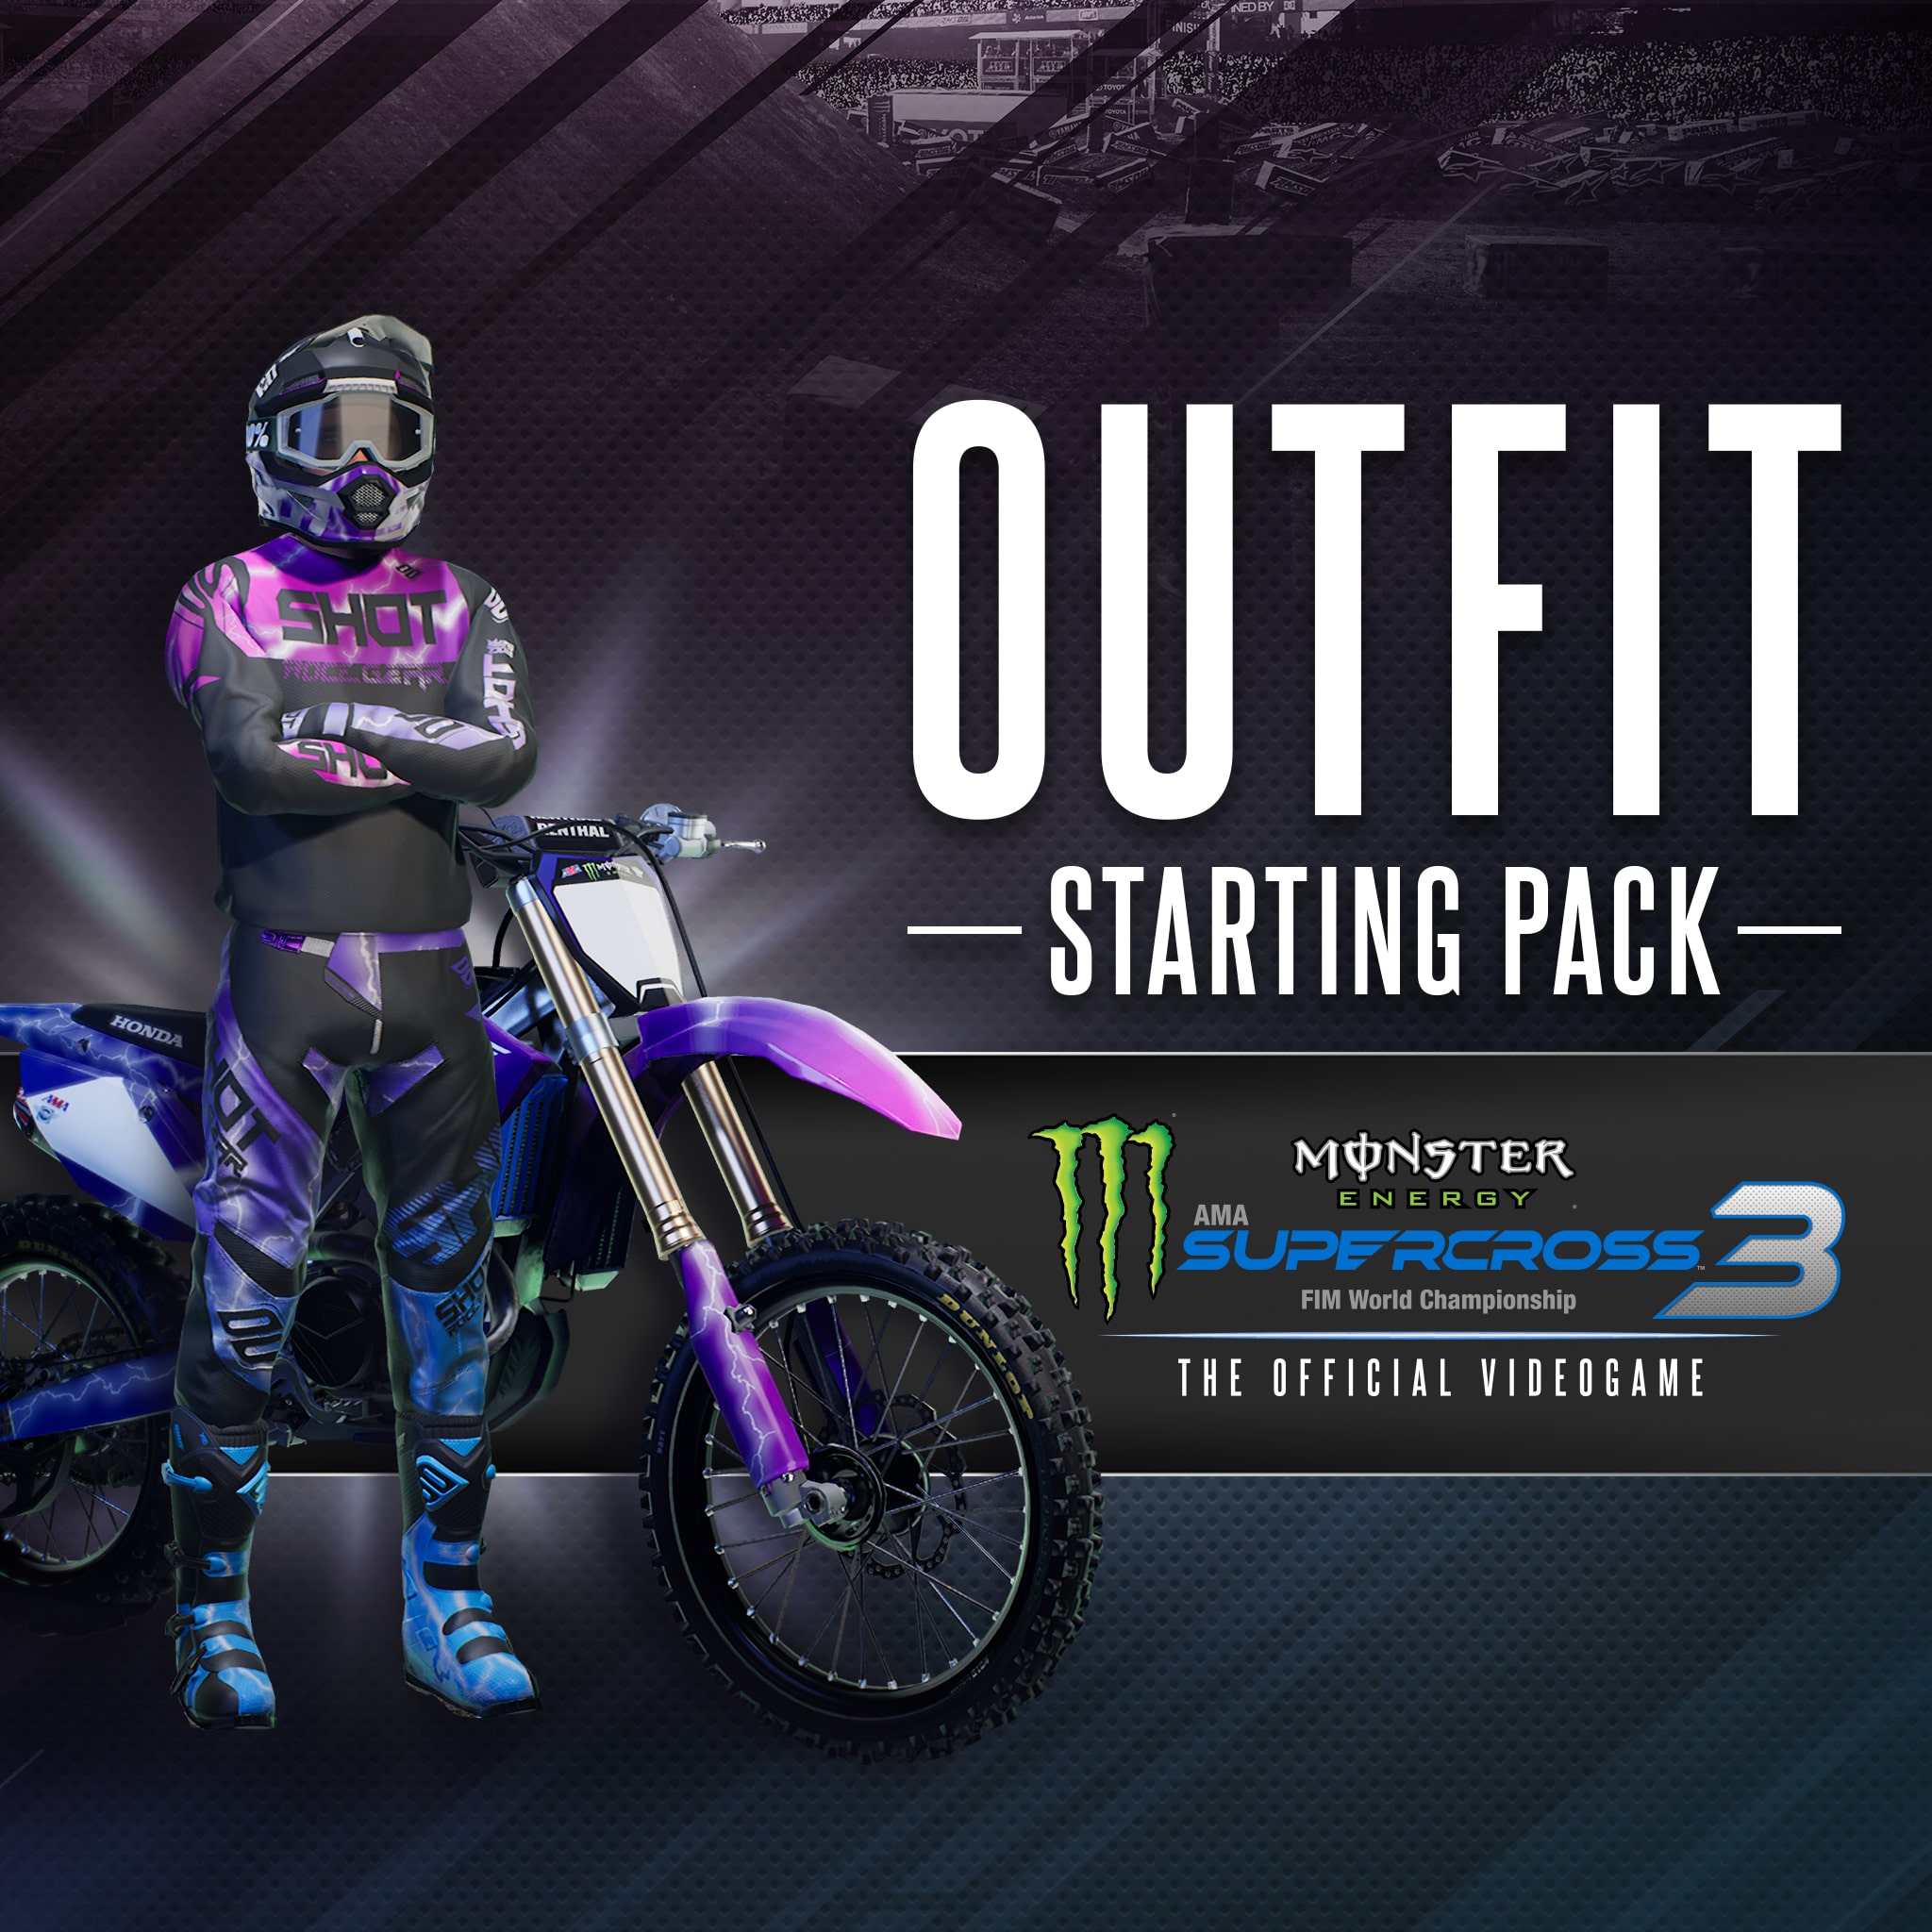 Monster Energy Supercross 3 - Outfit Starting Pack